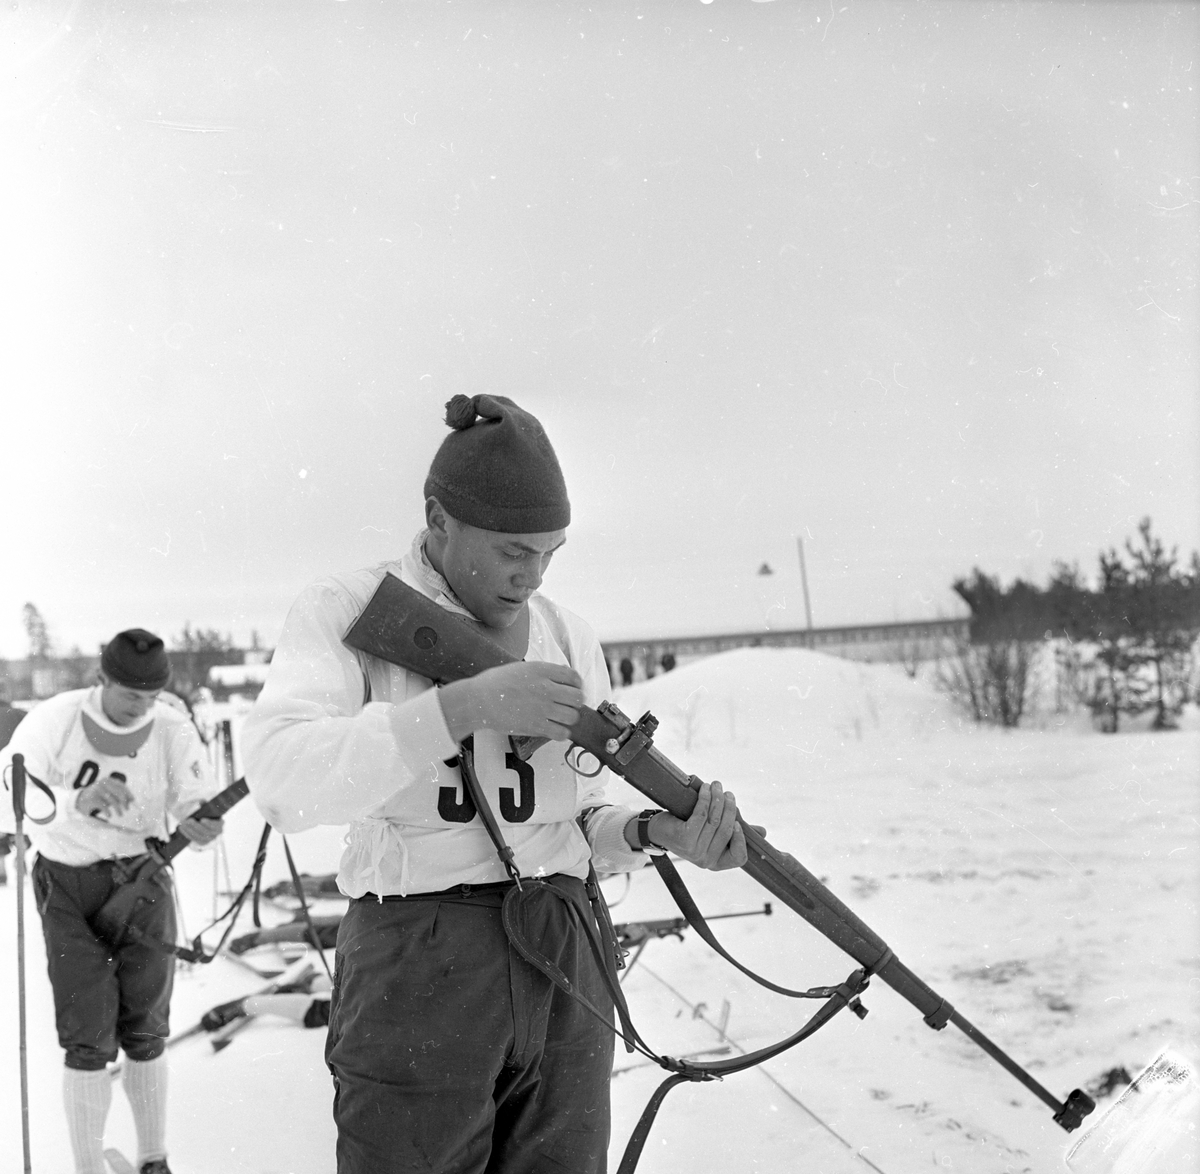 Elverum, 19.02.1962, NM i skiskyting, konkurransen er i gang.